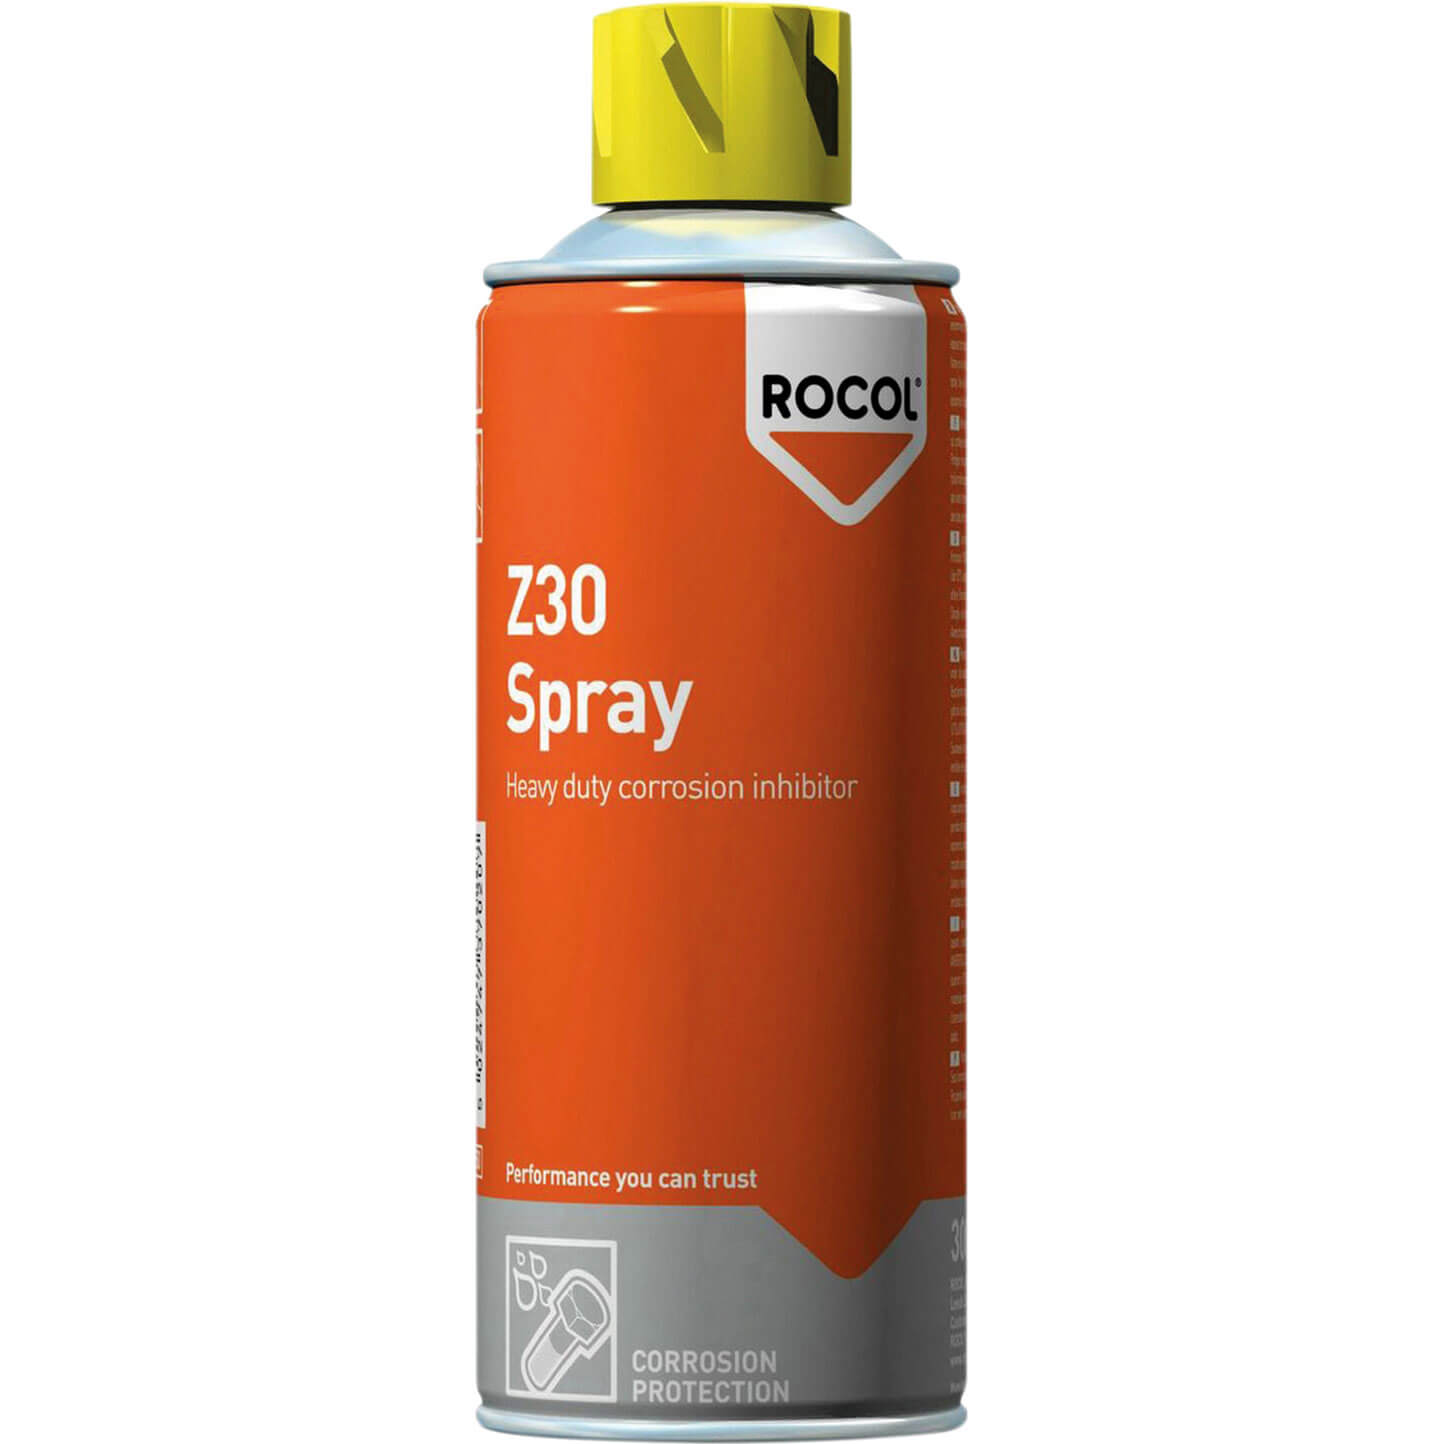 Image of Rocol Z30 Heavy Duty Corrosion Inhibitor Spray 300ml